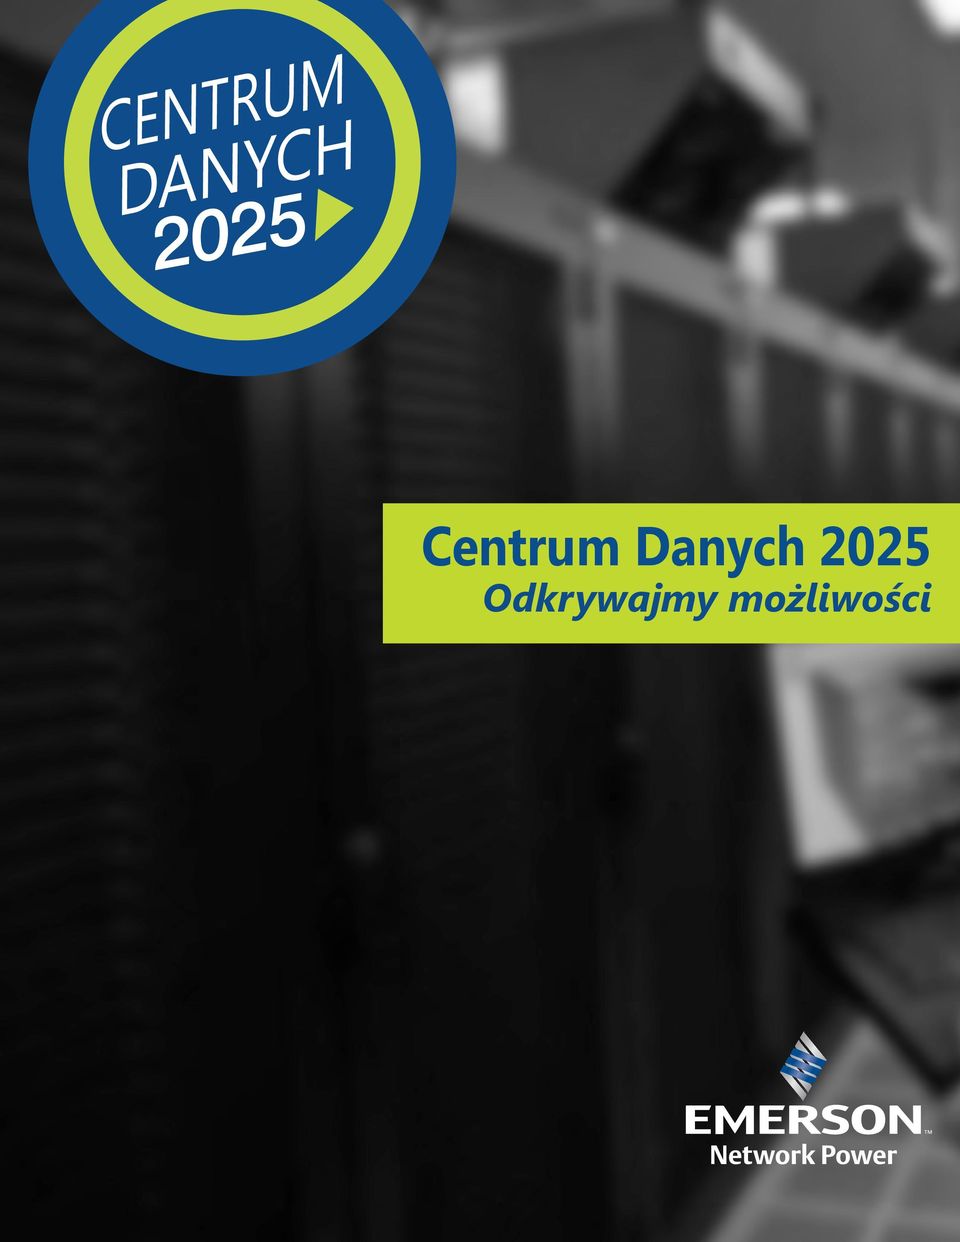 Danych 2025